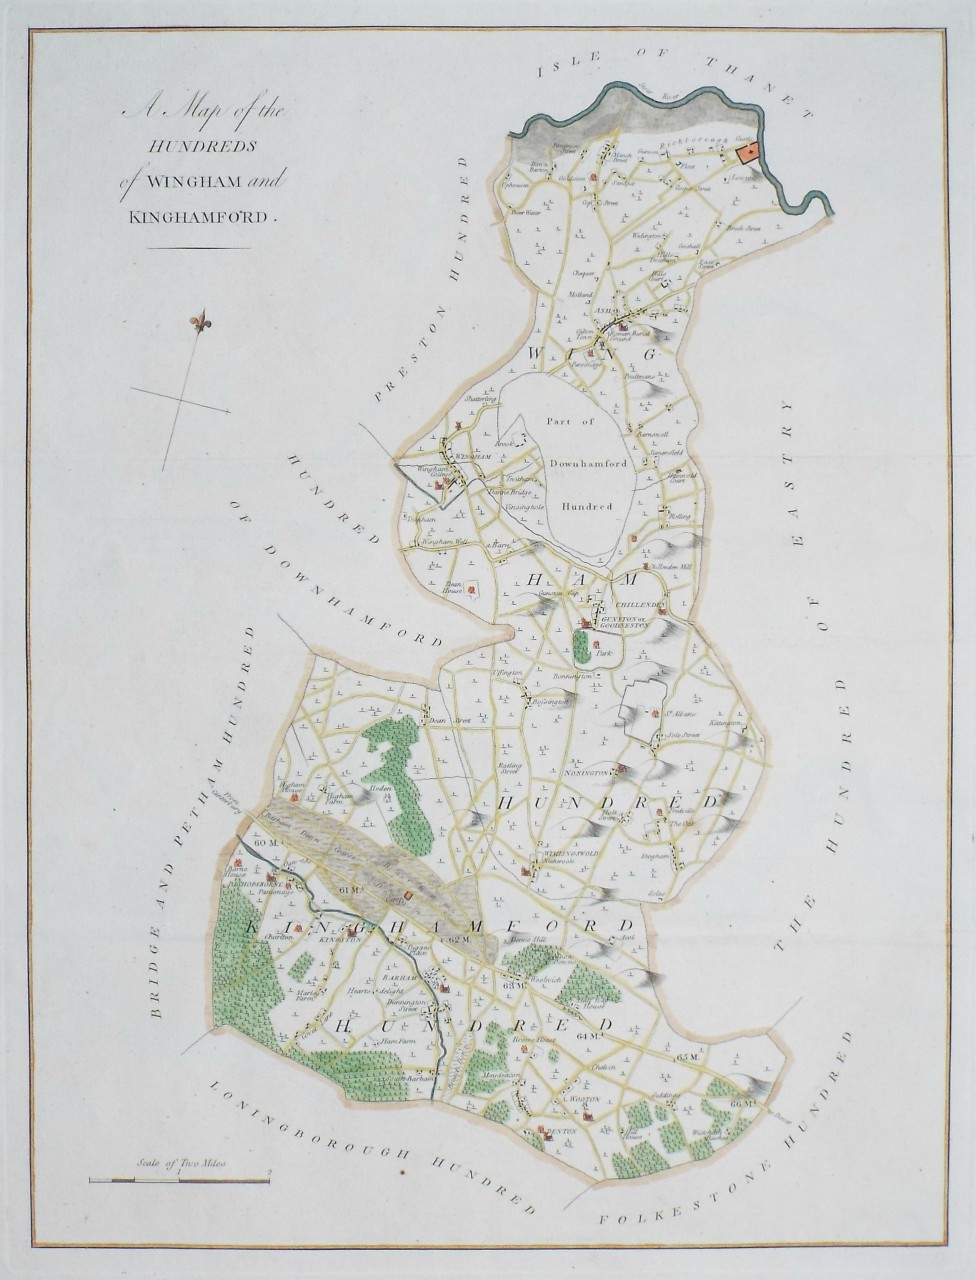 Map of Toltingtrough and Shamel